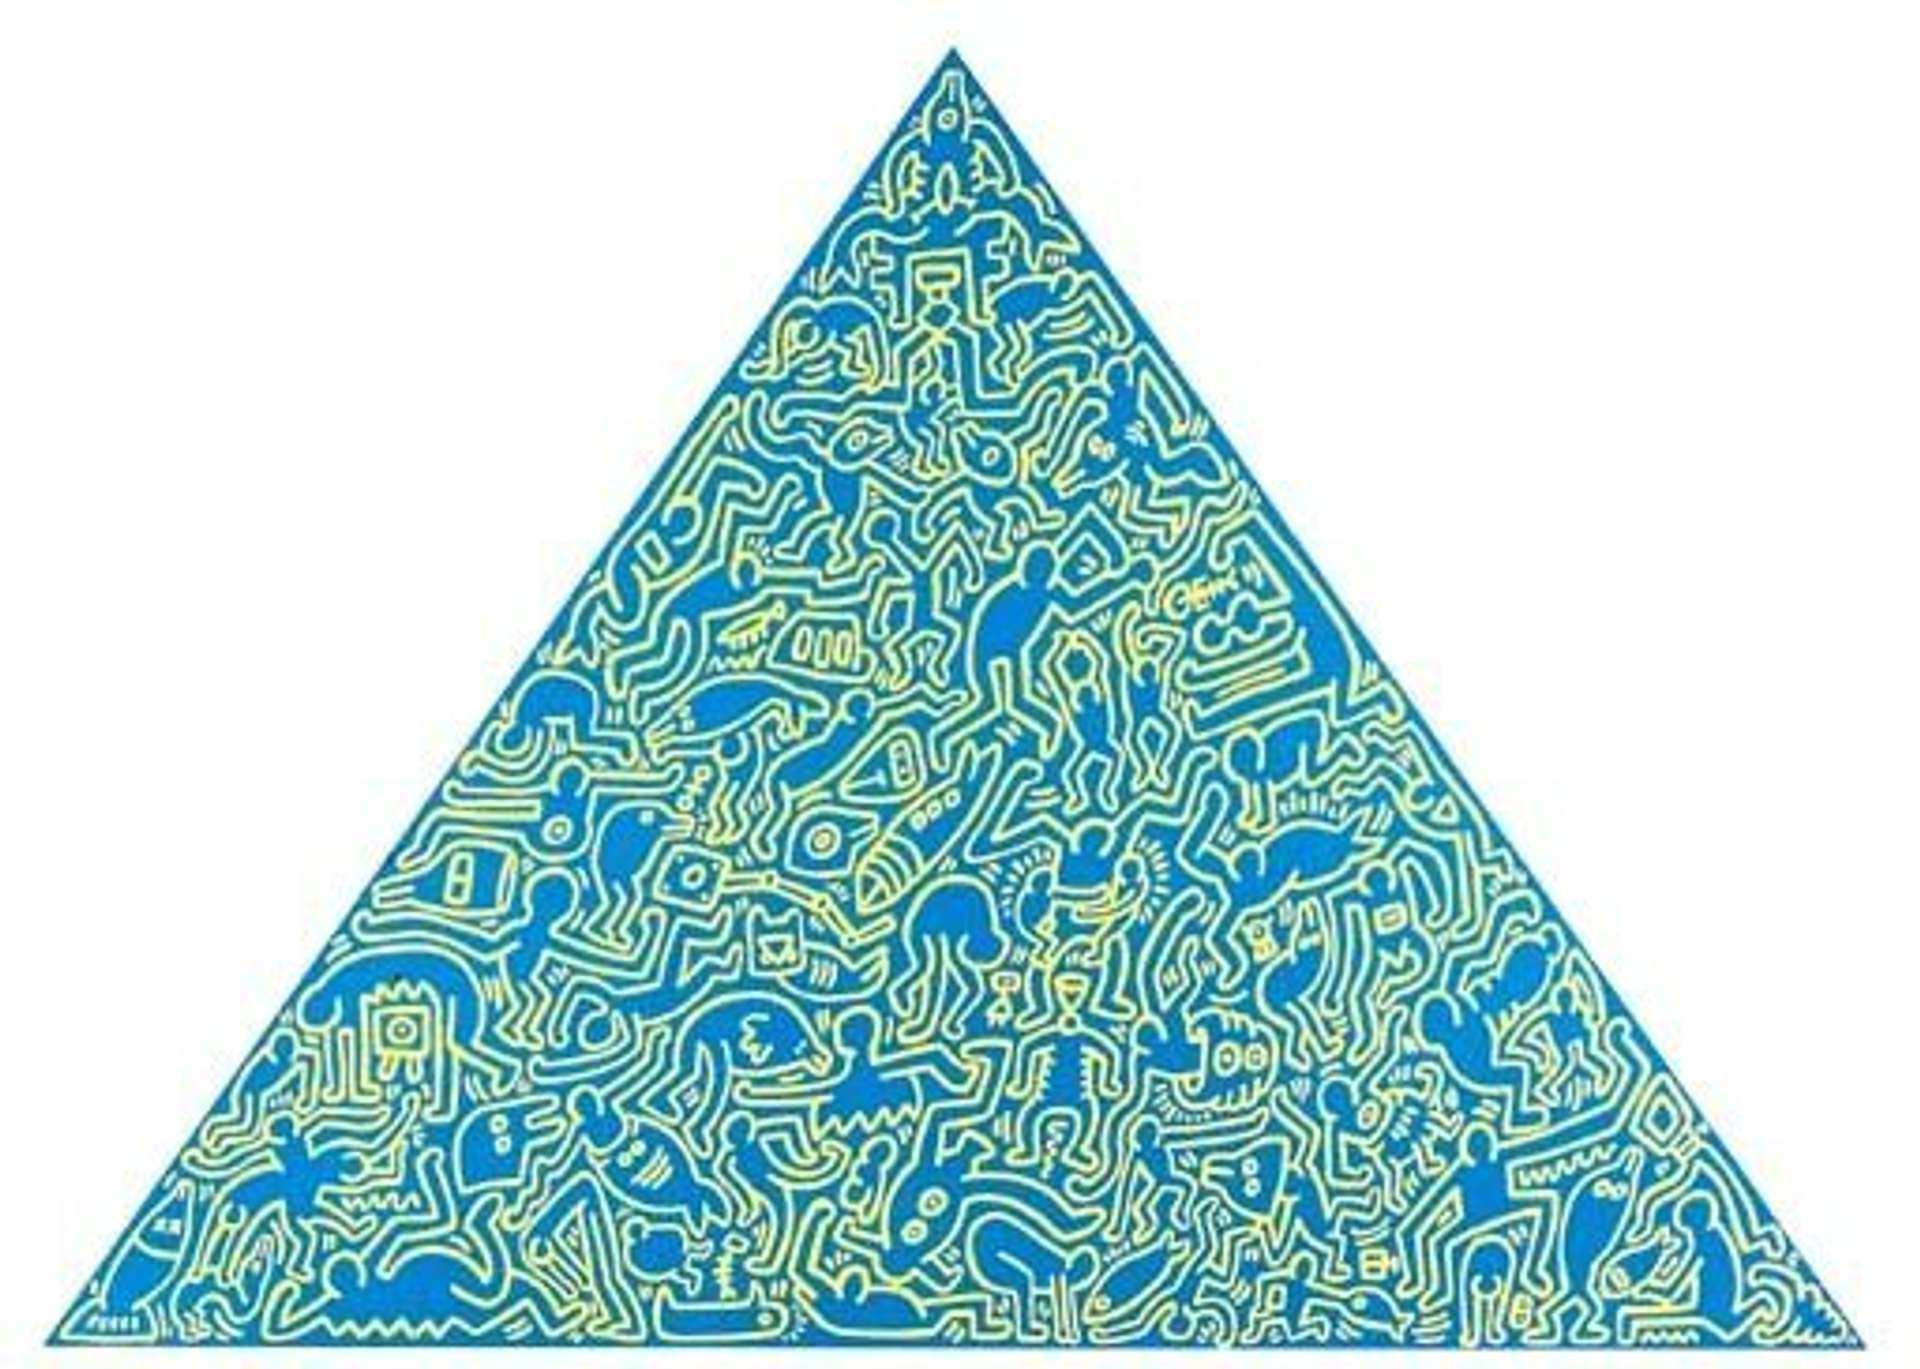 Pyramid (blue) by Keith Haring